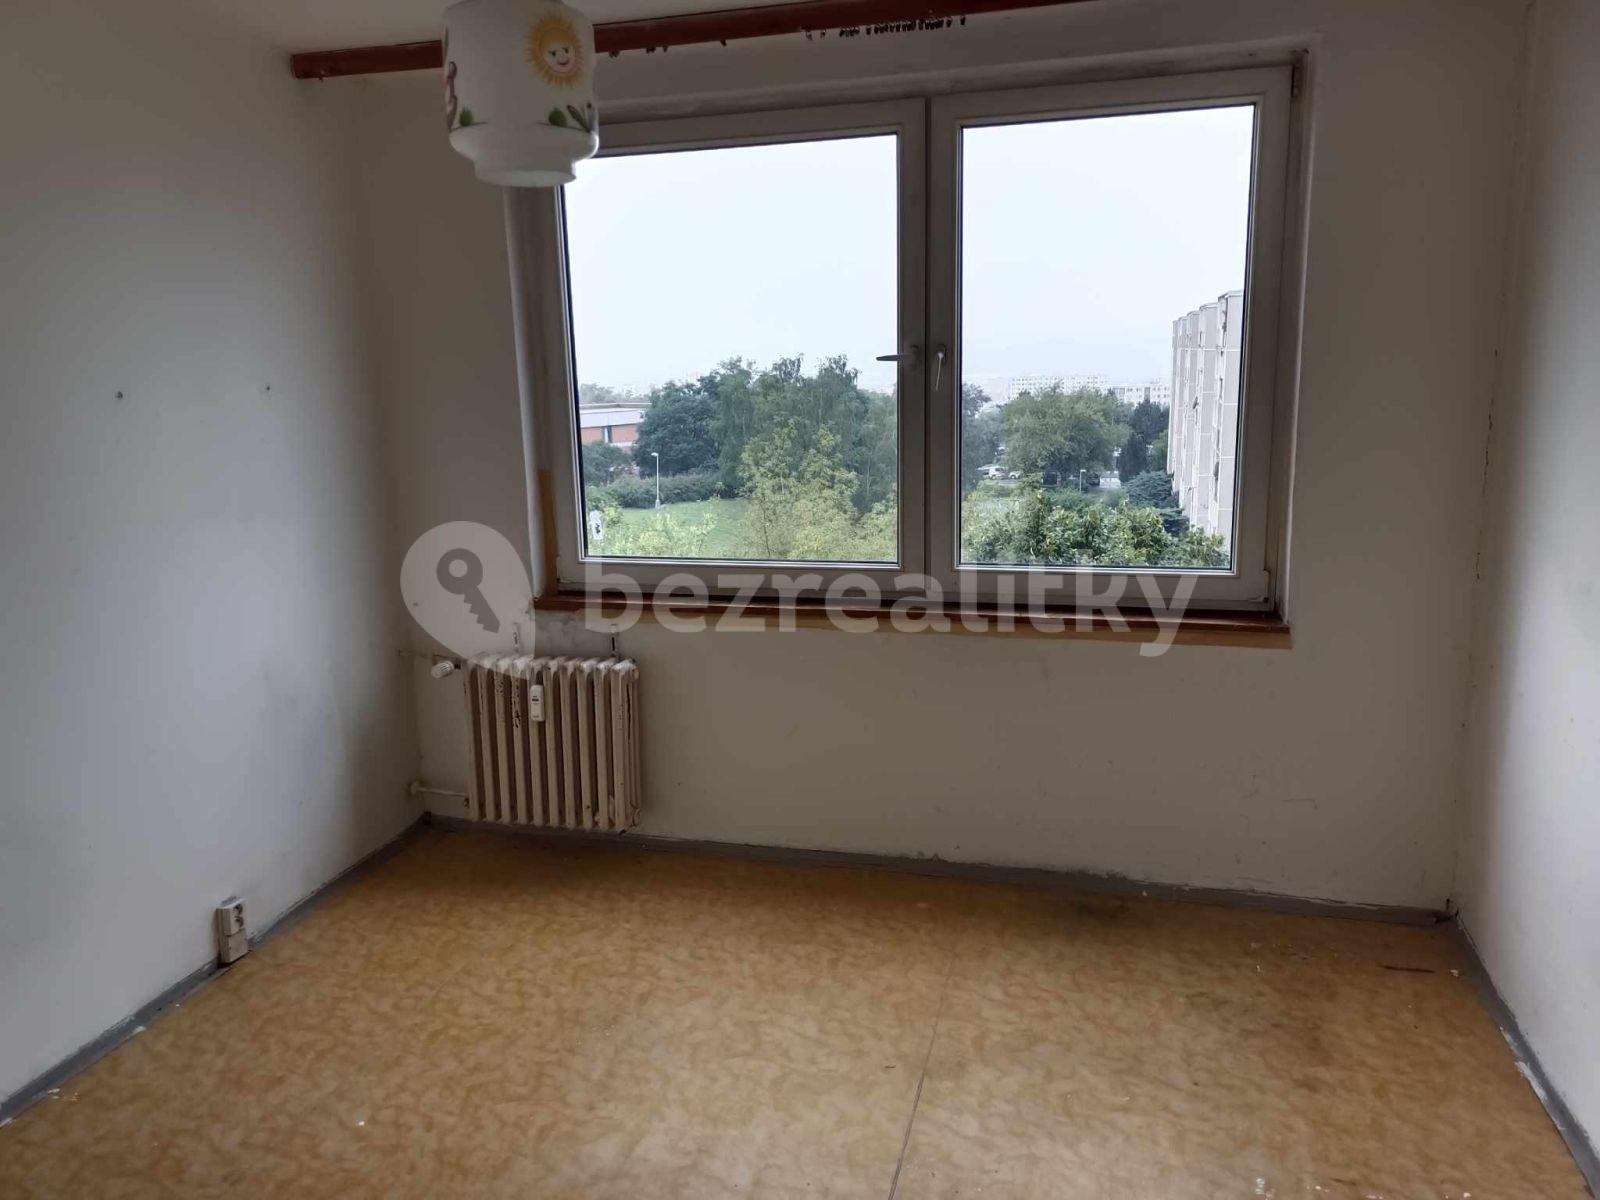 2 bedroom with open-plan kitchen flat for sale, 65 m², Levského, Prague, Prague